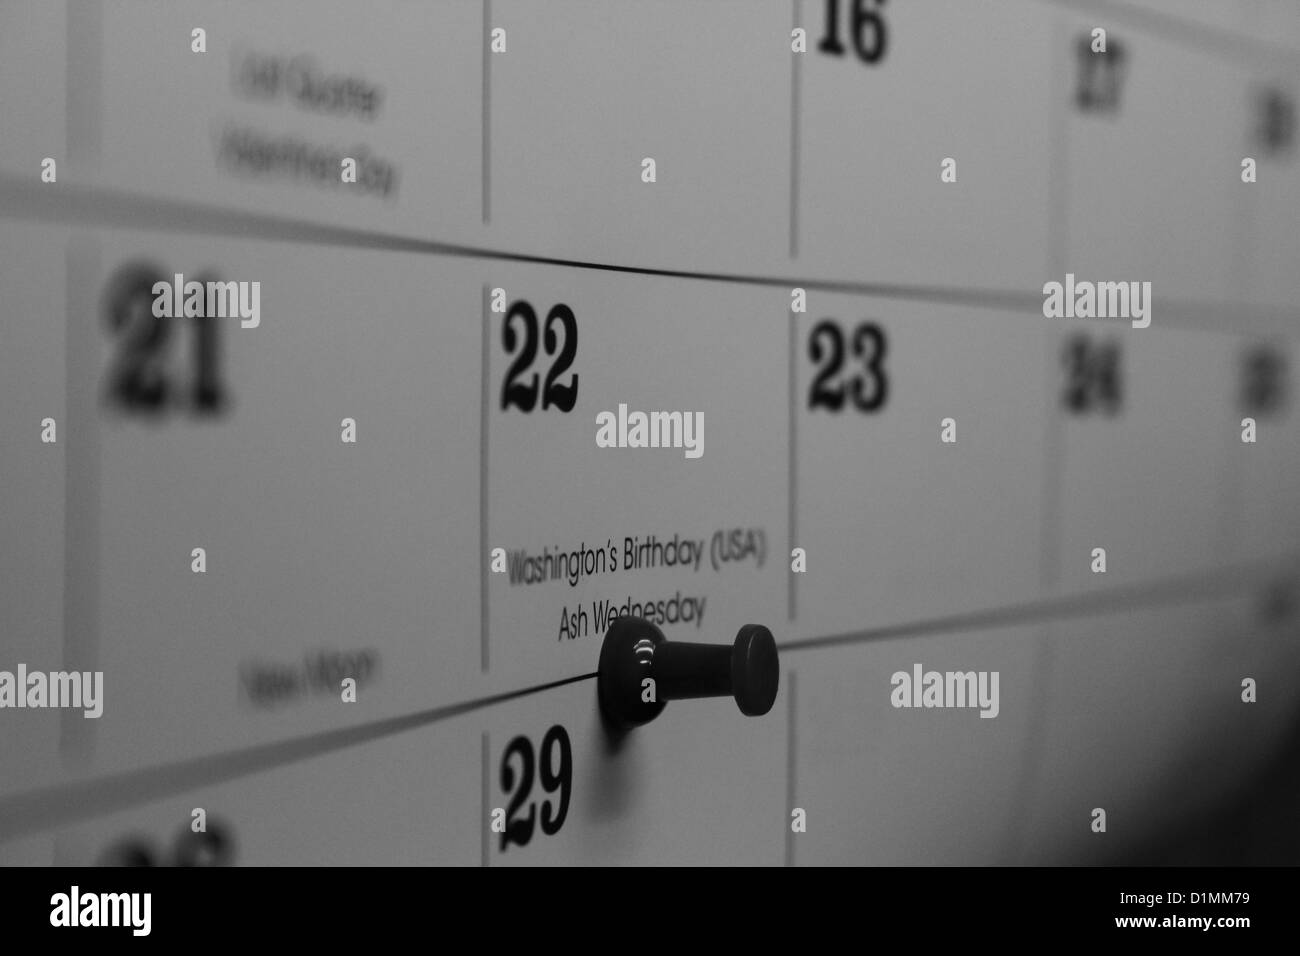 Calendario Foto Stock